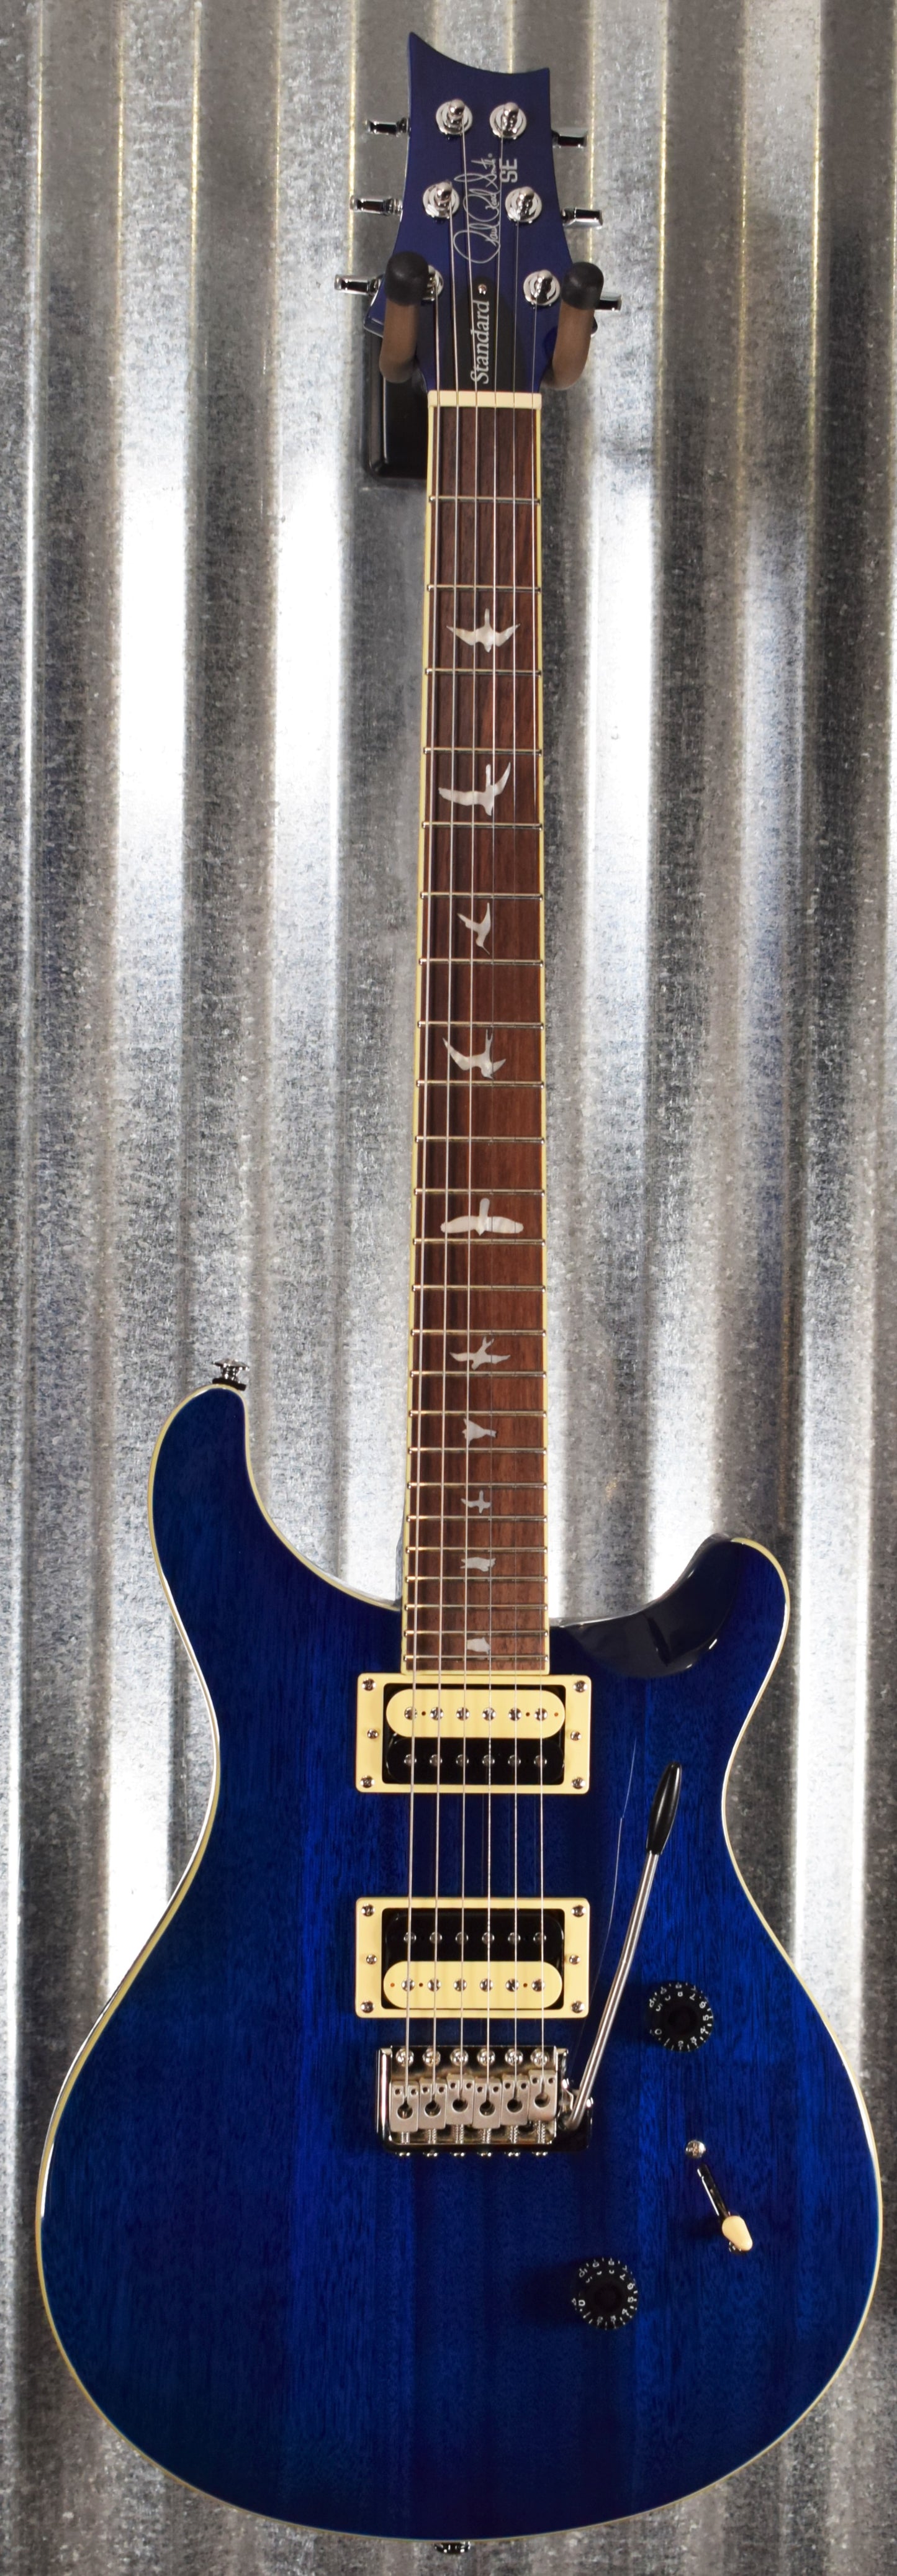 PRS Paul Reed Smith SE Standard 24 Translucent Blue Guitar #4101